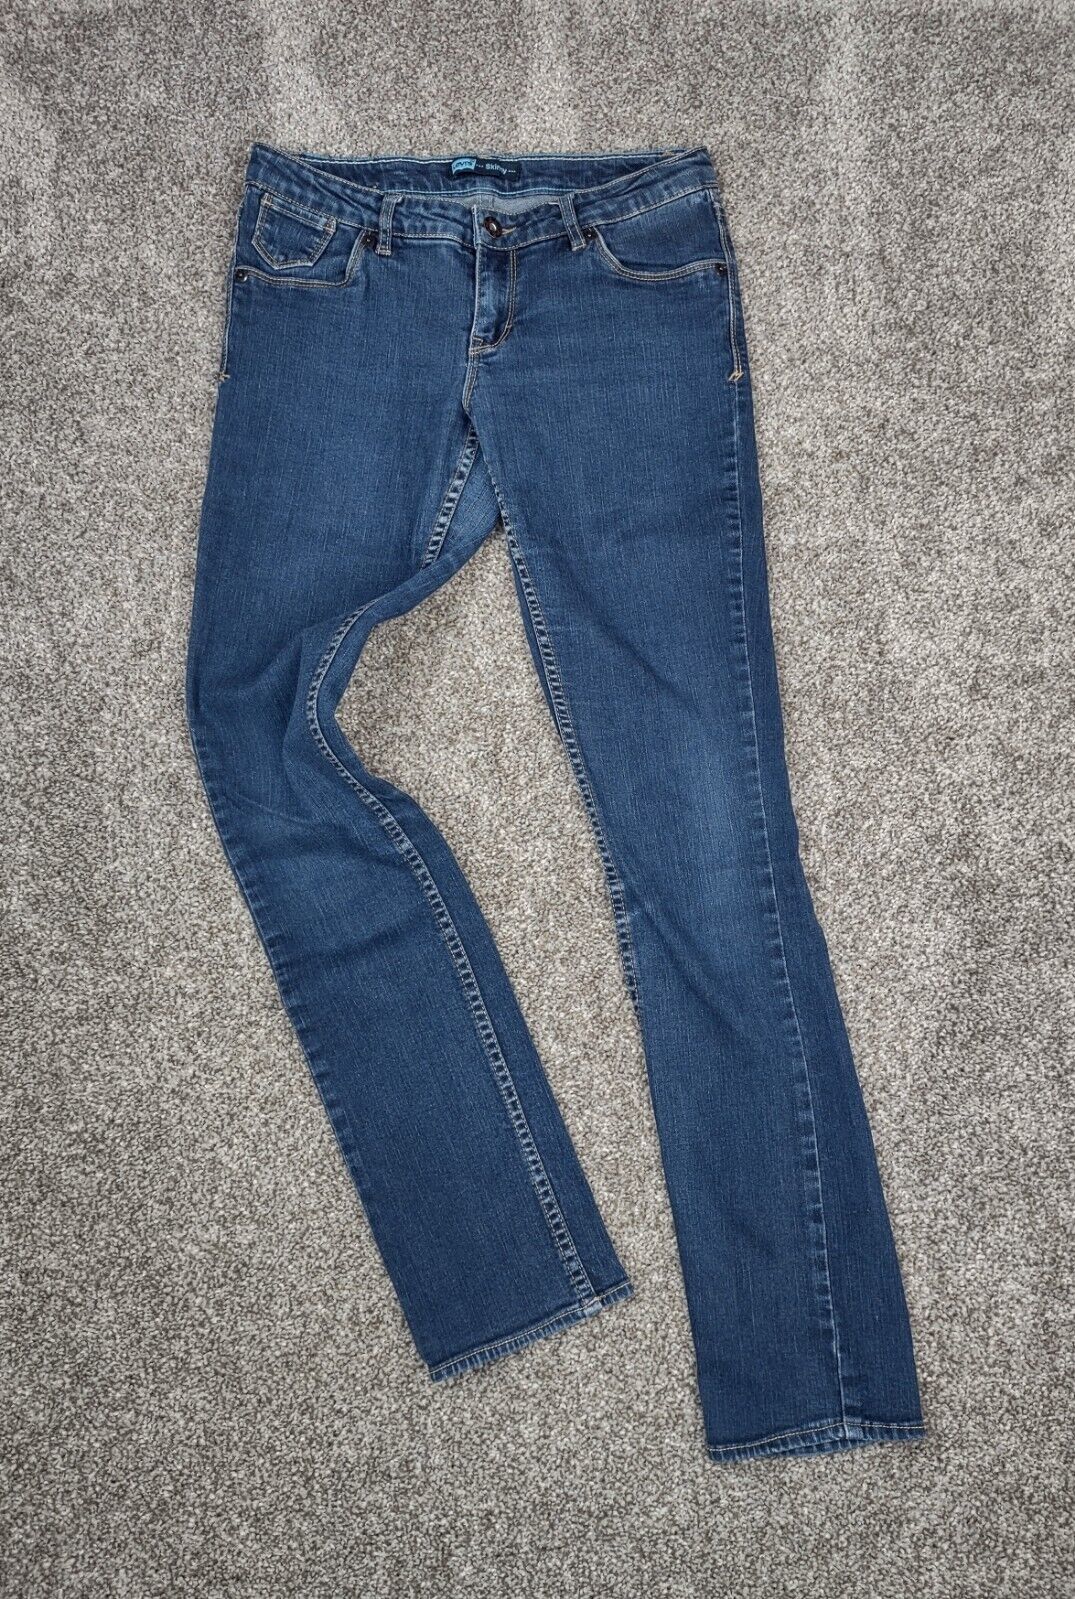 Ariya Jeans Blue Denim Women Size 5/6 Regular Solid Low Rise Bootcut Jeans